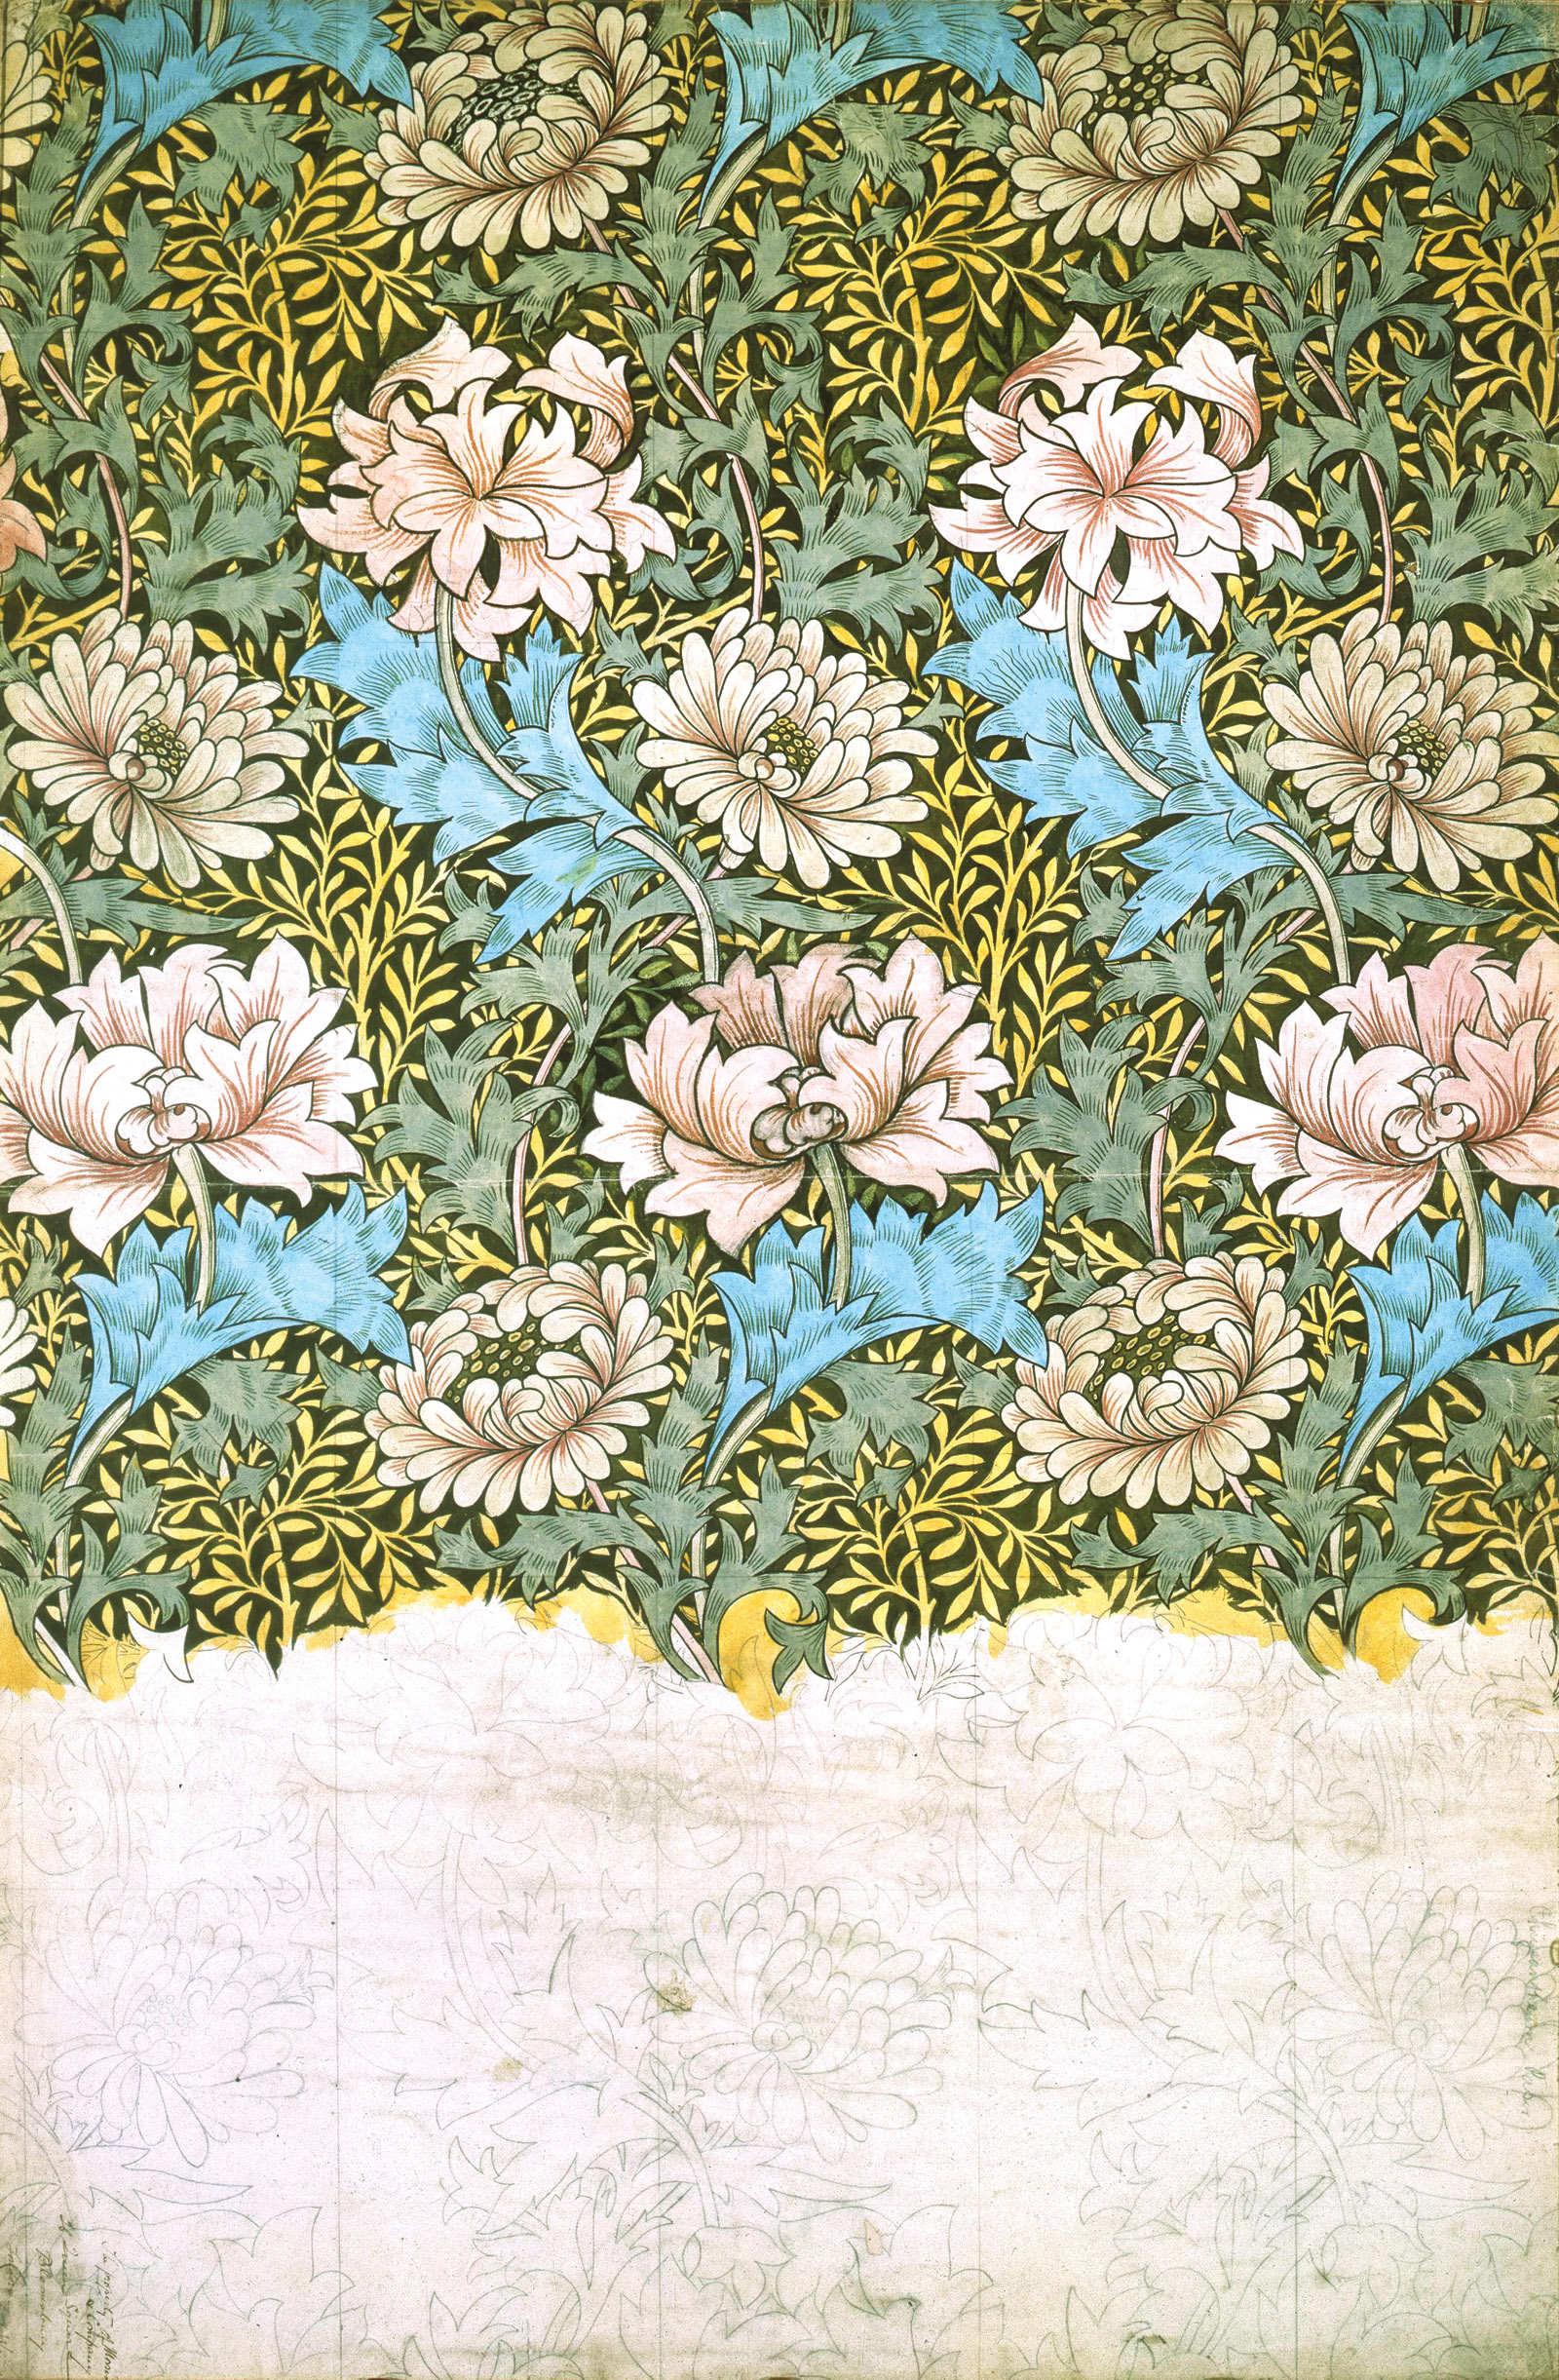 Design for Chrysanthemum Wallpaper; illustration by William Morris